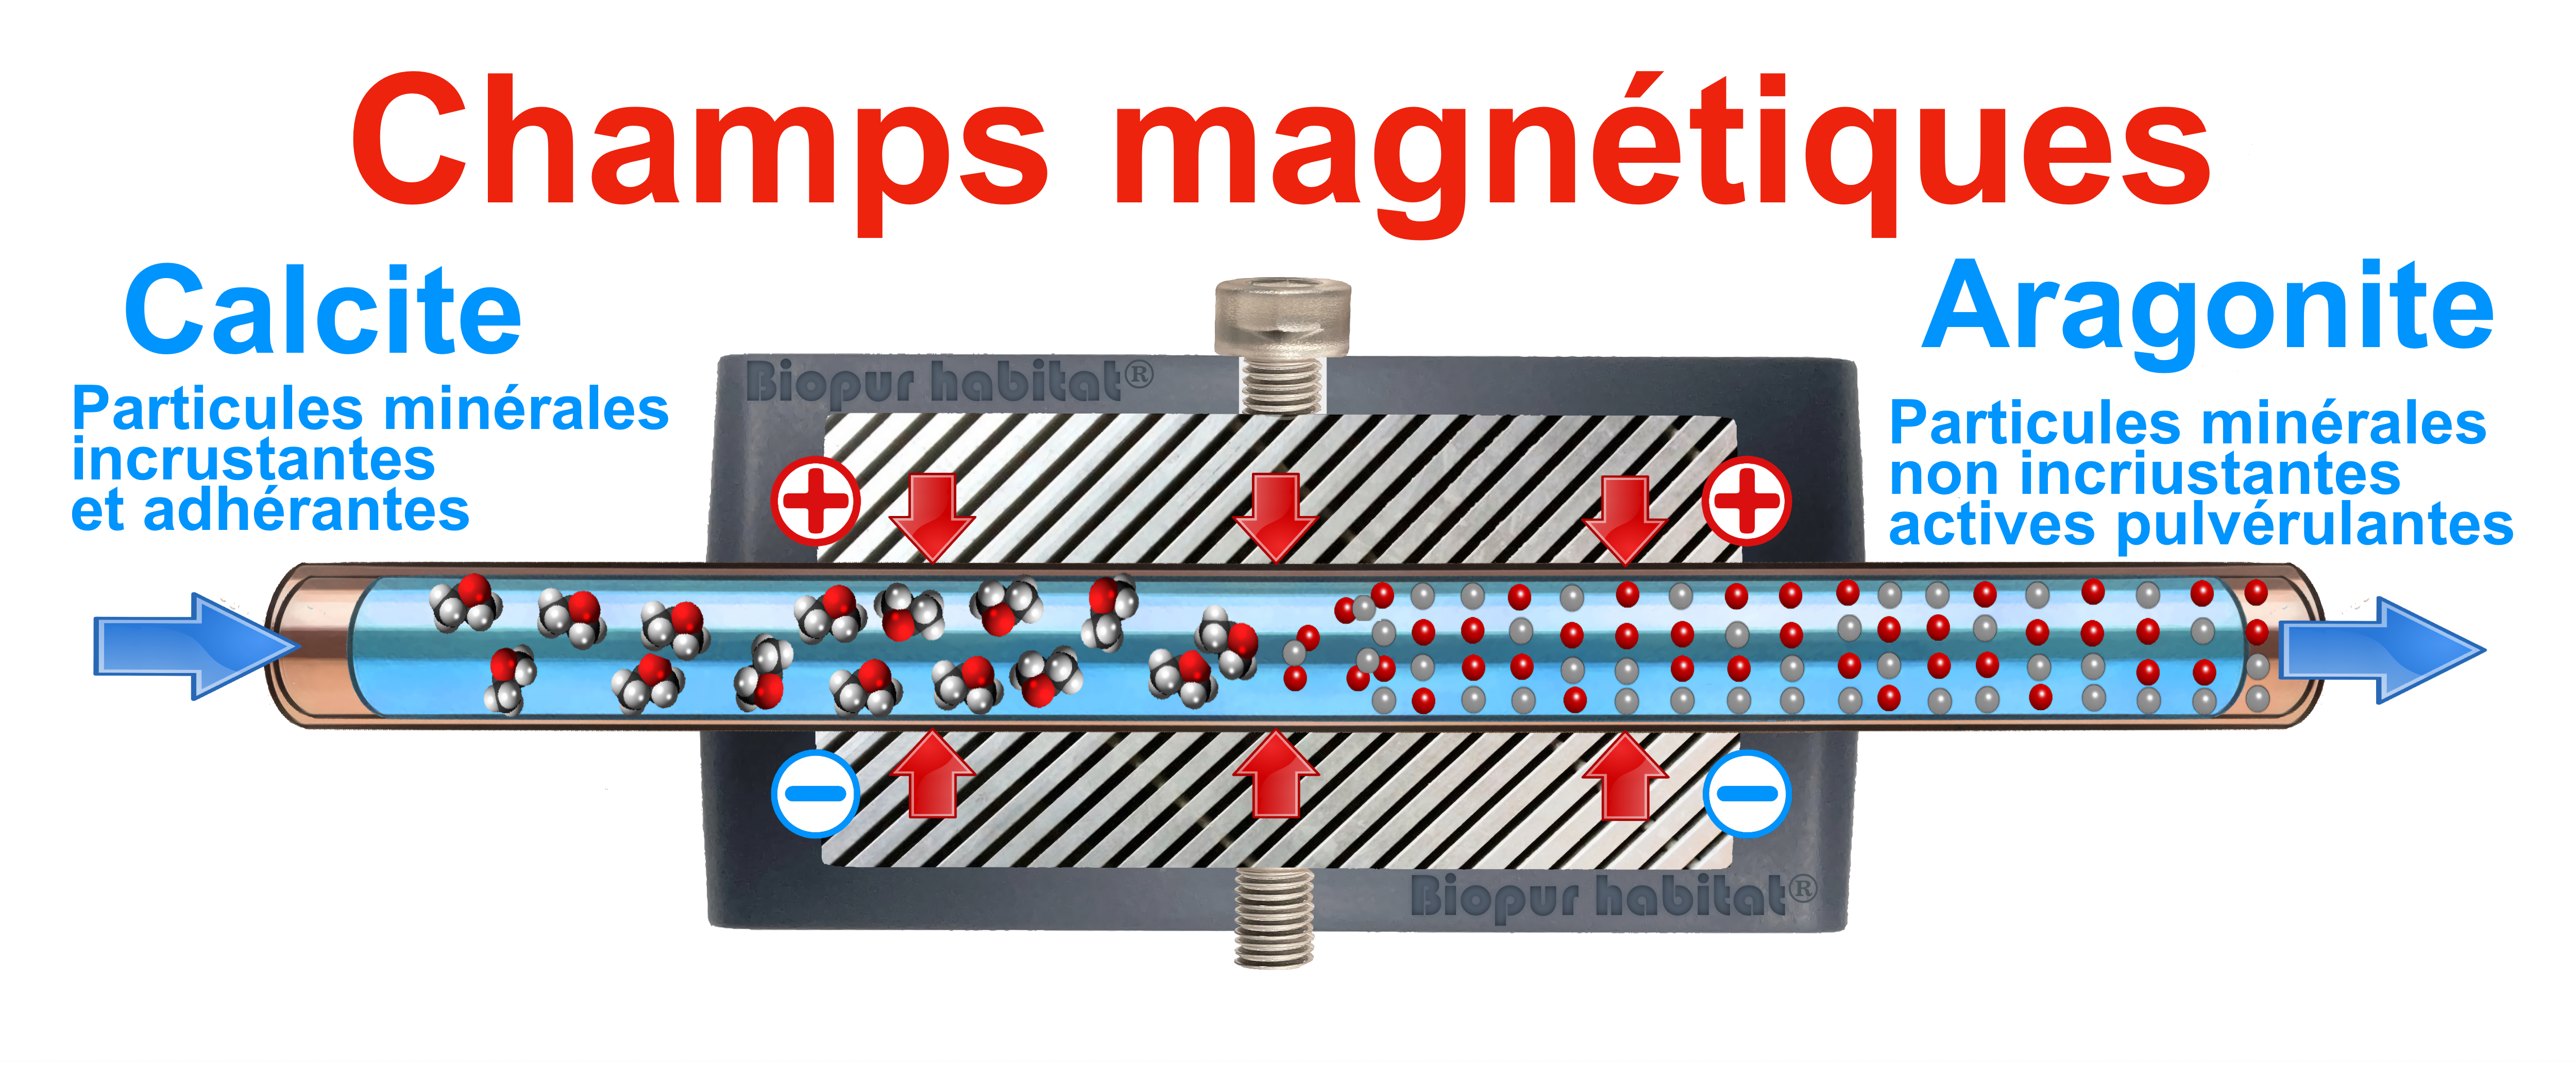 Aimant anti calcaire magnétique powermag Lo Power 5200 gauss sp2